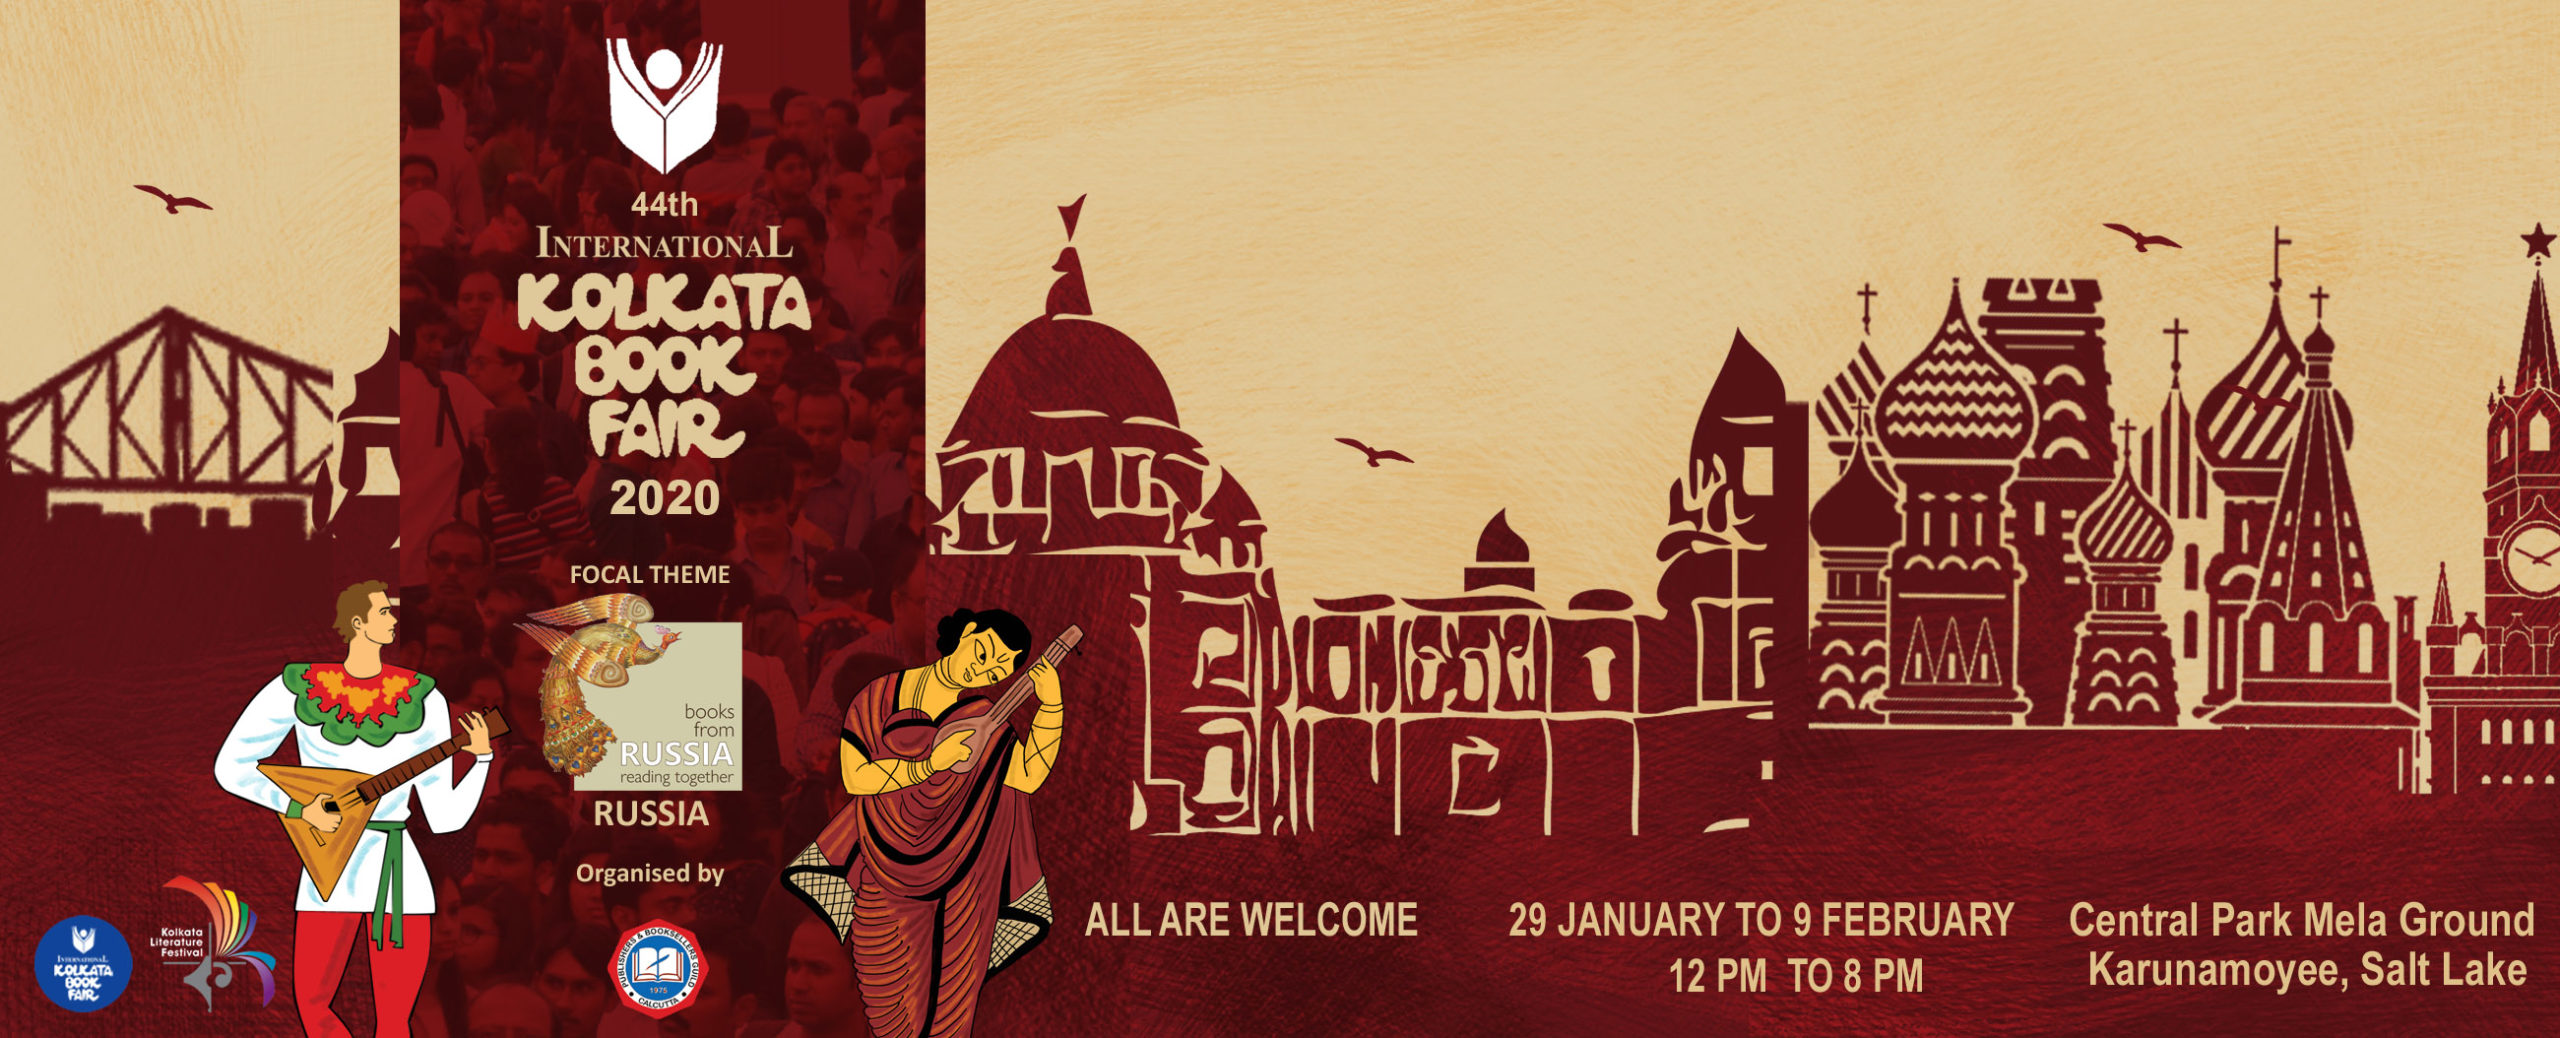 Kolkata is all ready to host the 44th edition of Kolkata Book Fair 2020